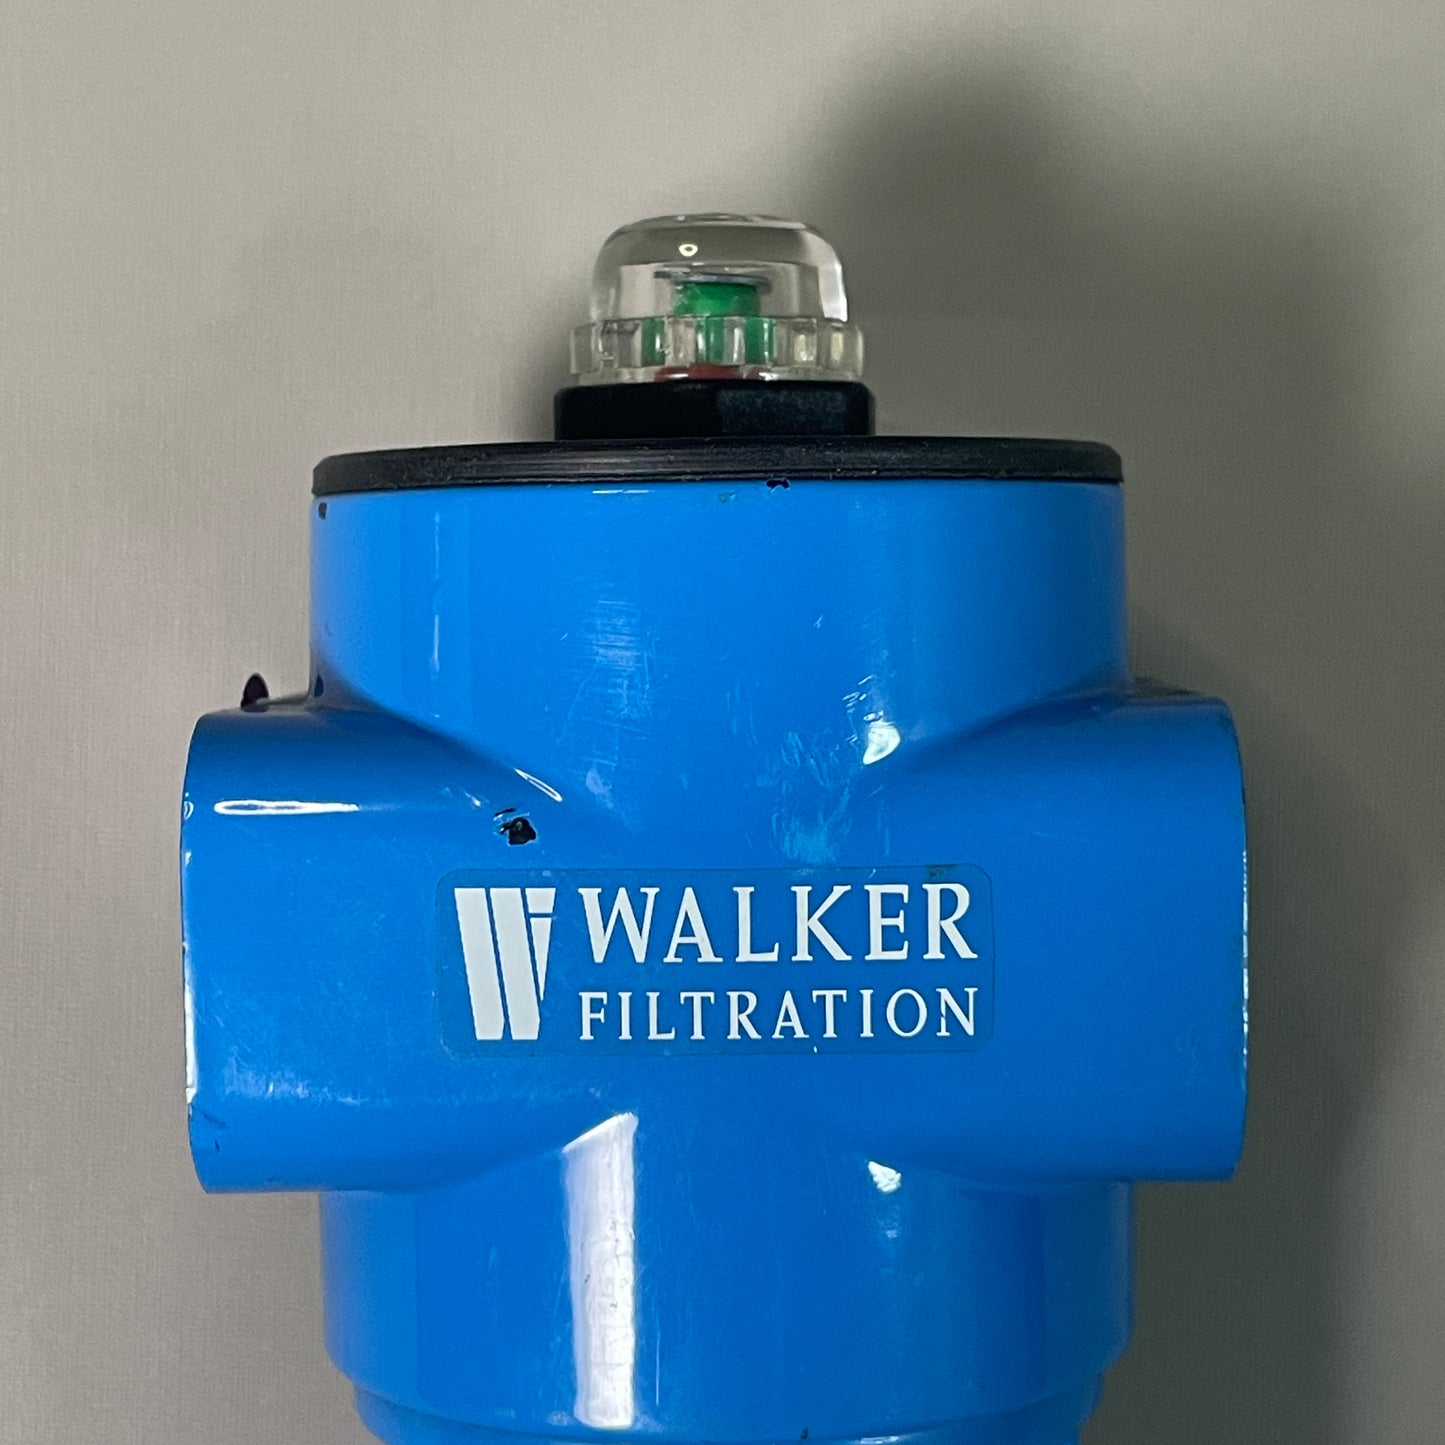 WALKER Filtration Filter Housing Max Pres. 232 psig Max Temp 248 deg F - A30XA (New Open Box)